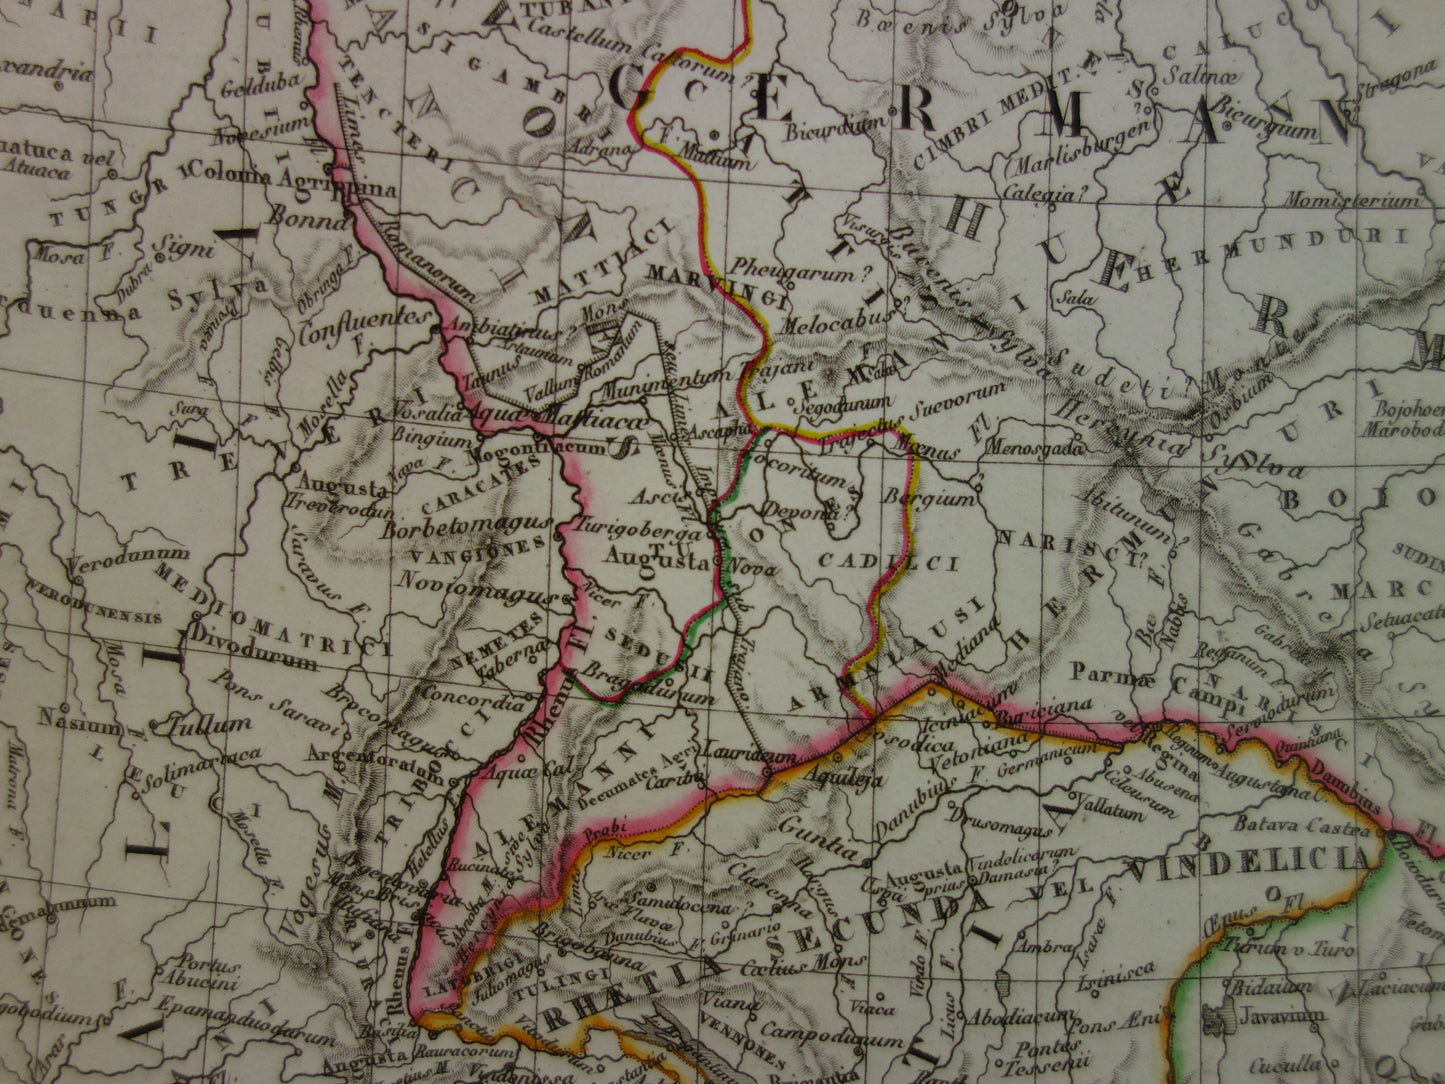 Grote oude landkaart van Groot-Brittanië en Duitsland in de Romeinse tijd 1827 originele antieke handgekleurde kaart poster van Romeinse Rijk Brittannia Hibernia Germania